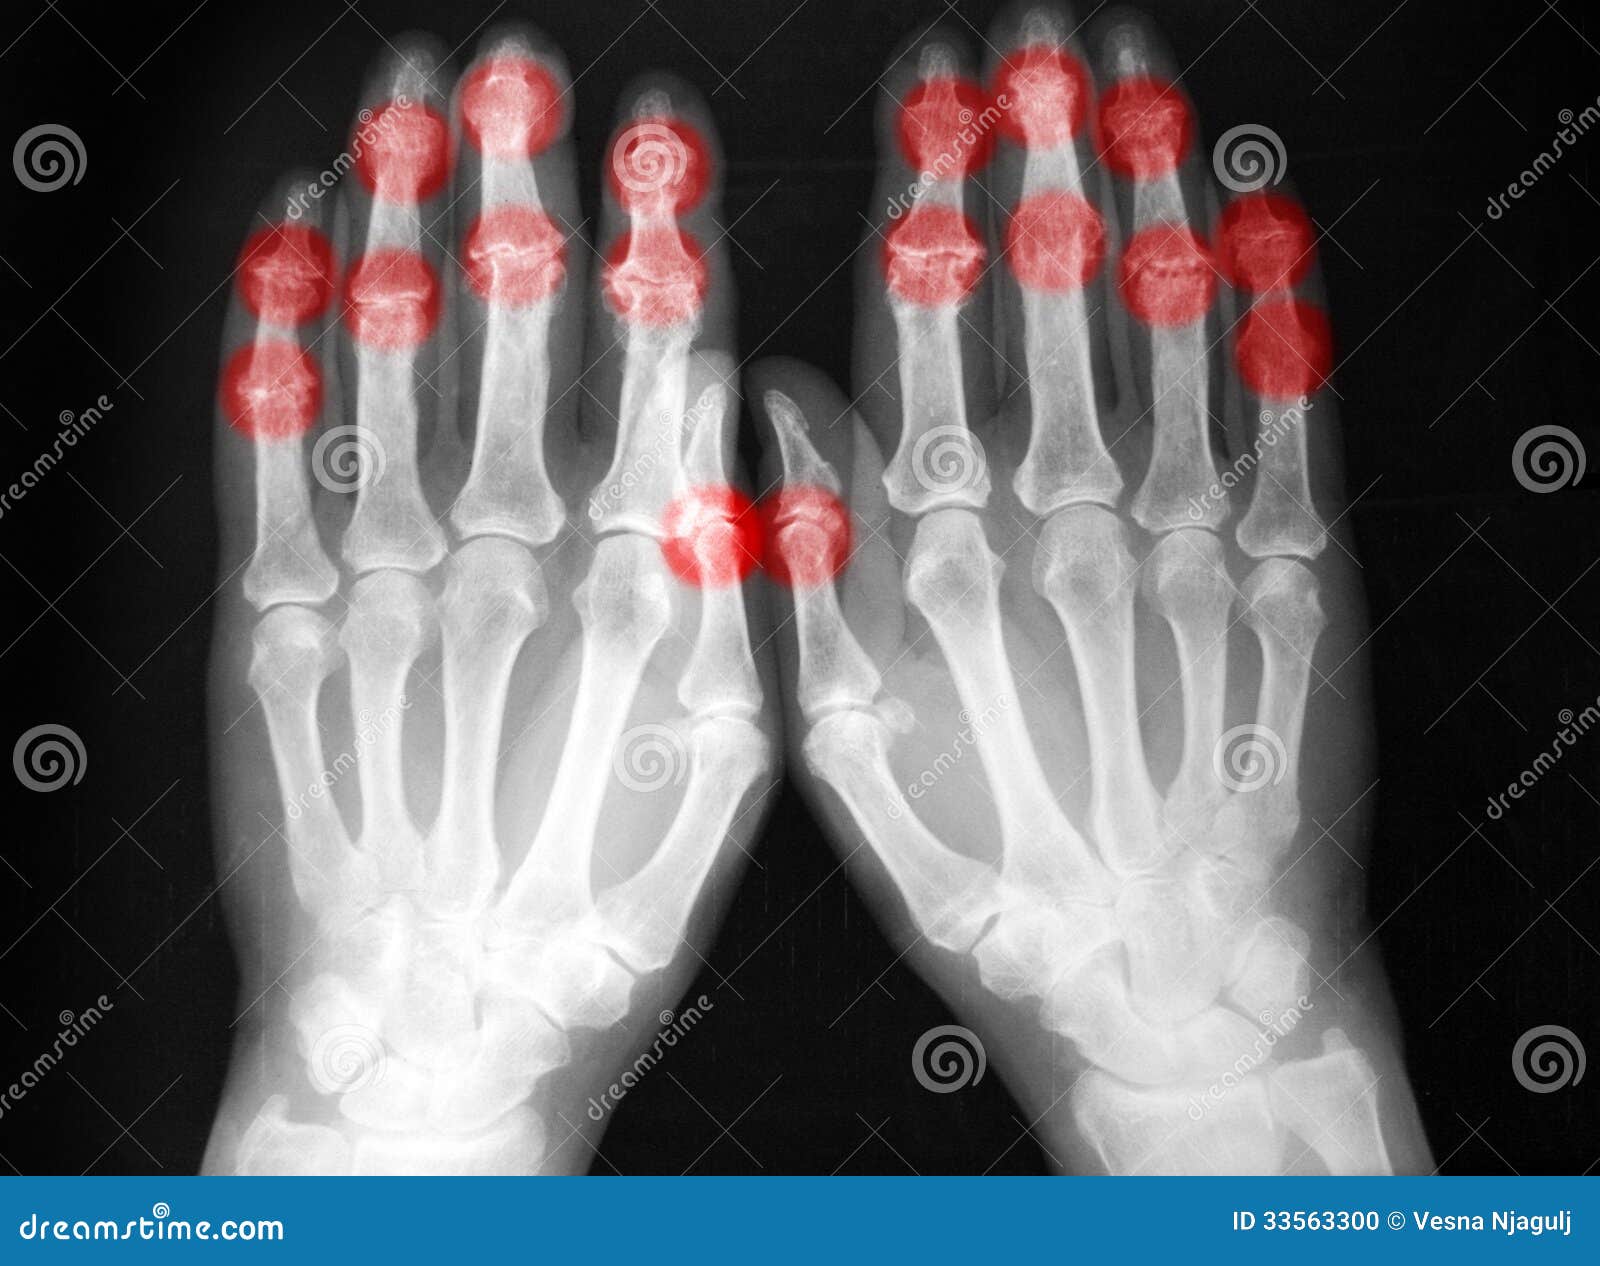 plain film, radiography, of both hands, arthritis